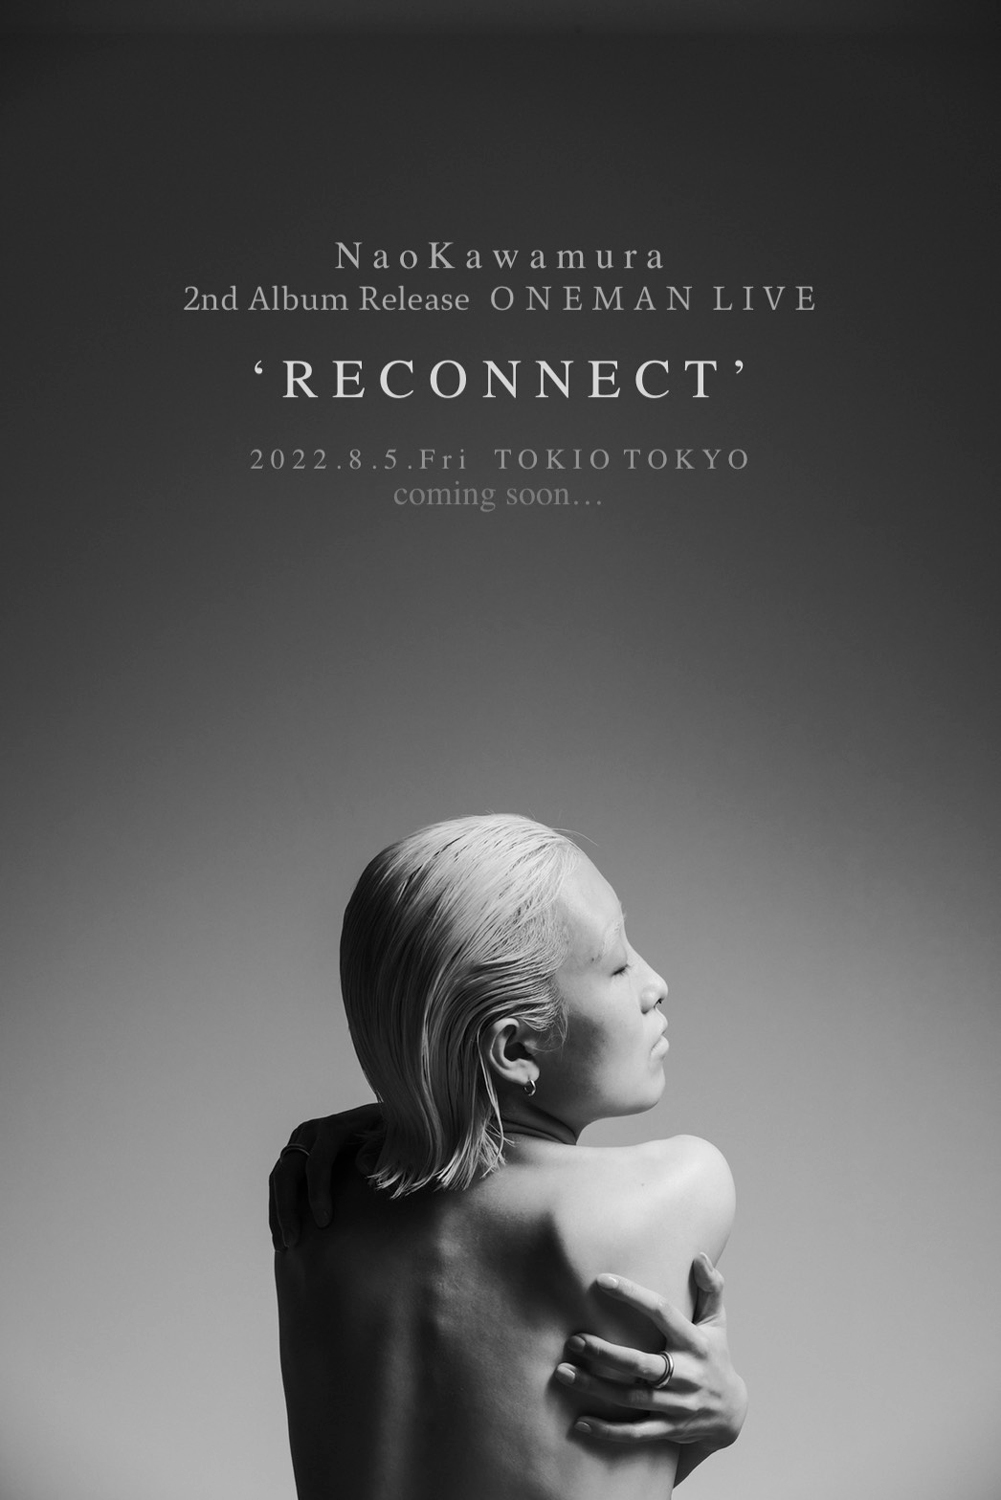 「Nao Kawamura 2nd Album Release ONEMAN LIVE ‘RECONNECT’」